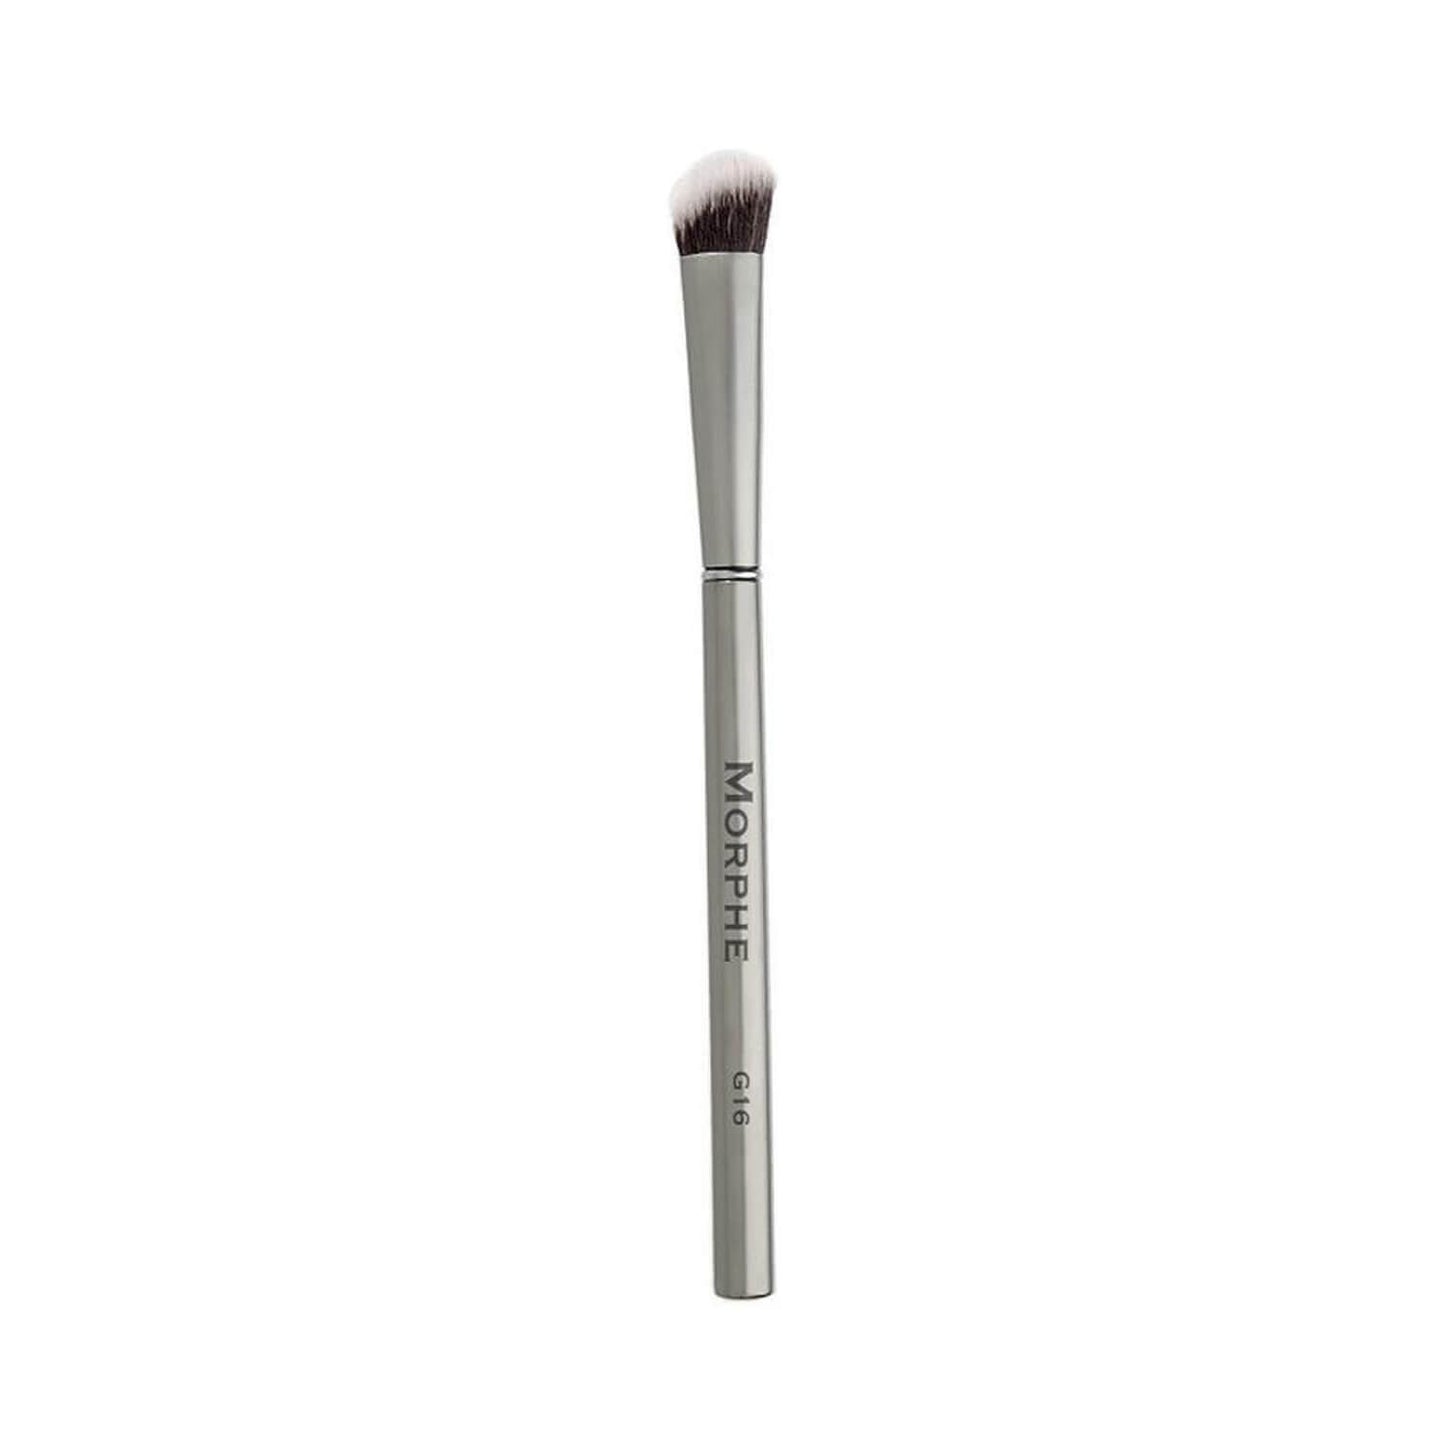 Morphe Cosmetics G16 Angle Blender/Shadow Brush